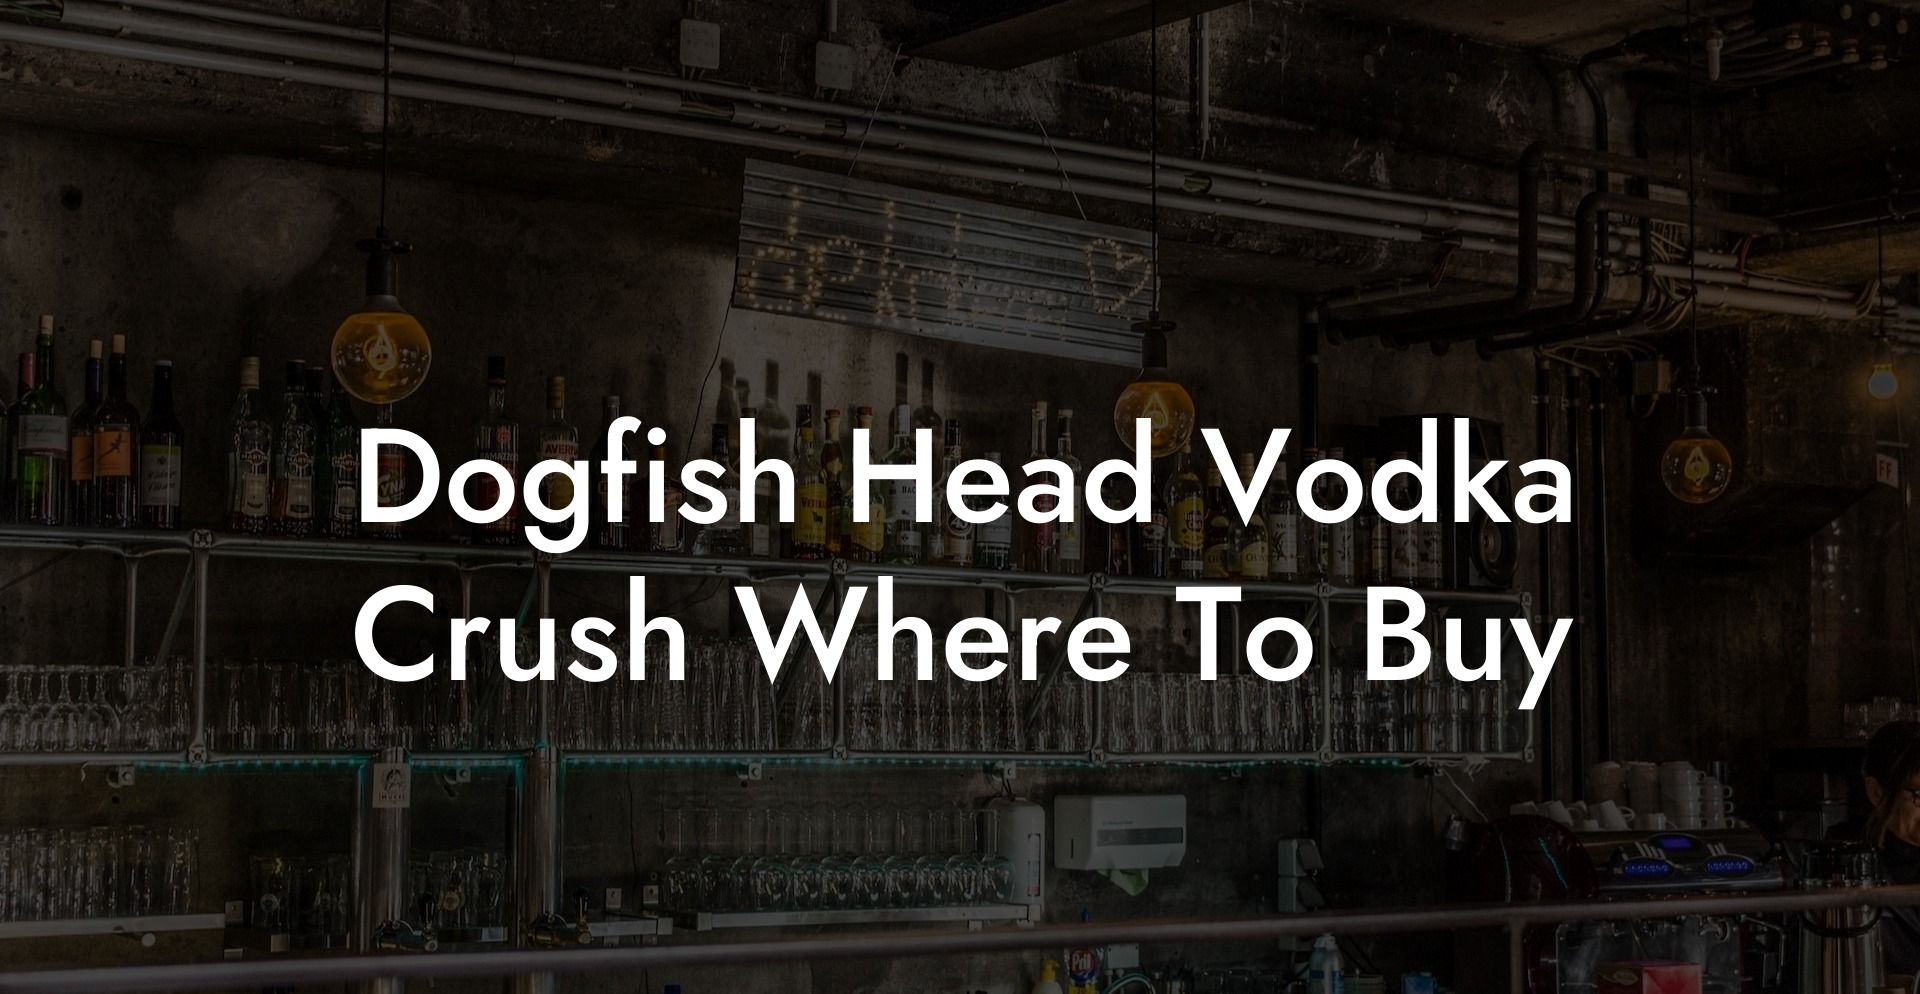 Dogfish Head Vodka Crush Where To Buy